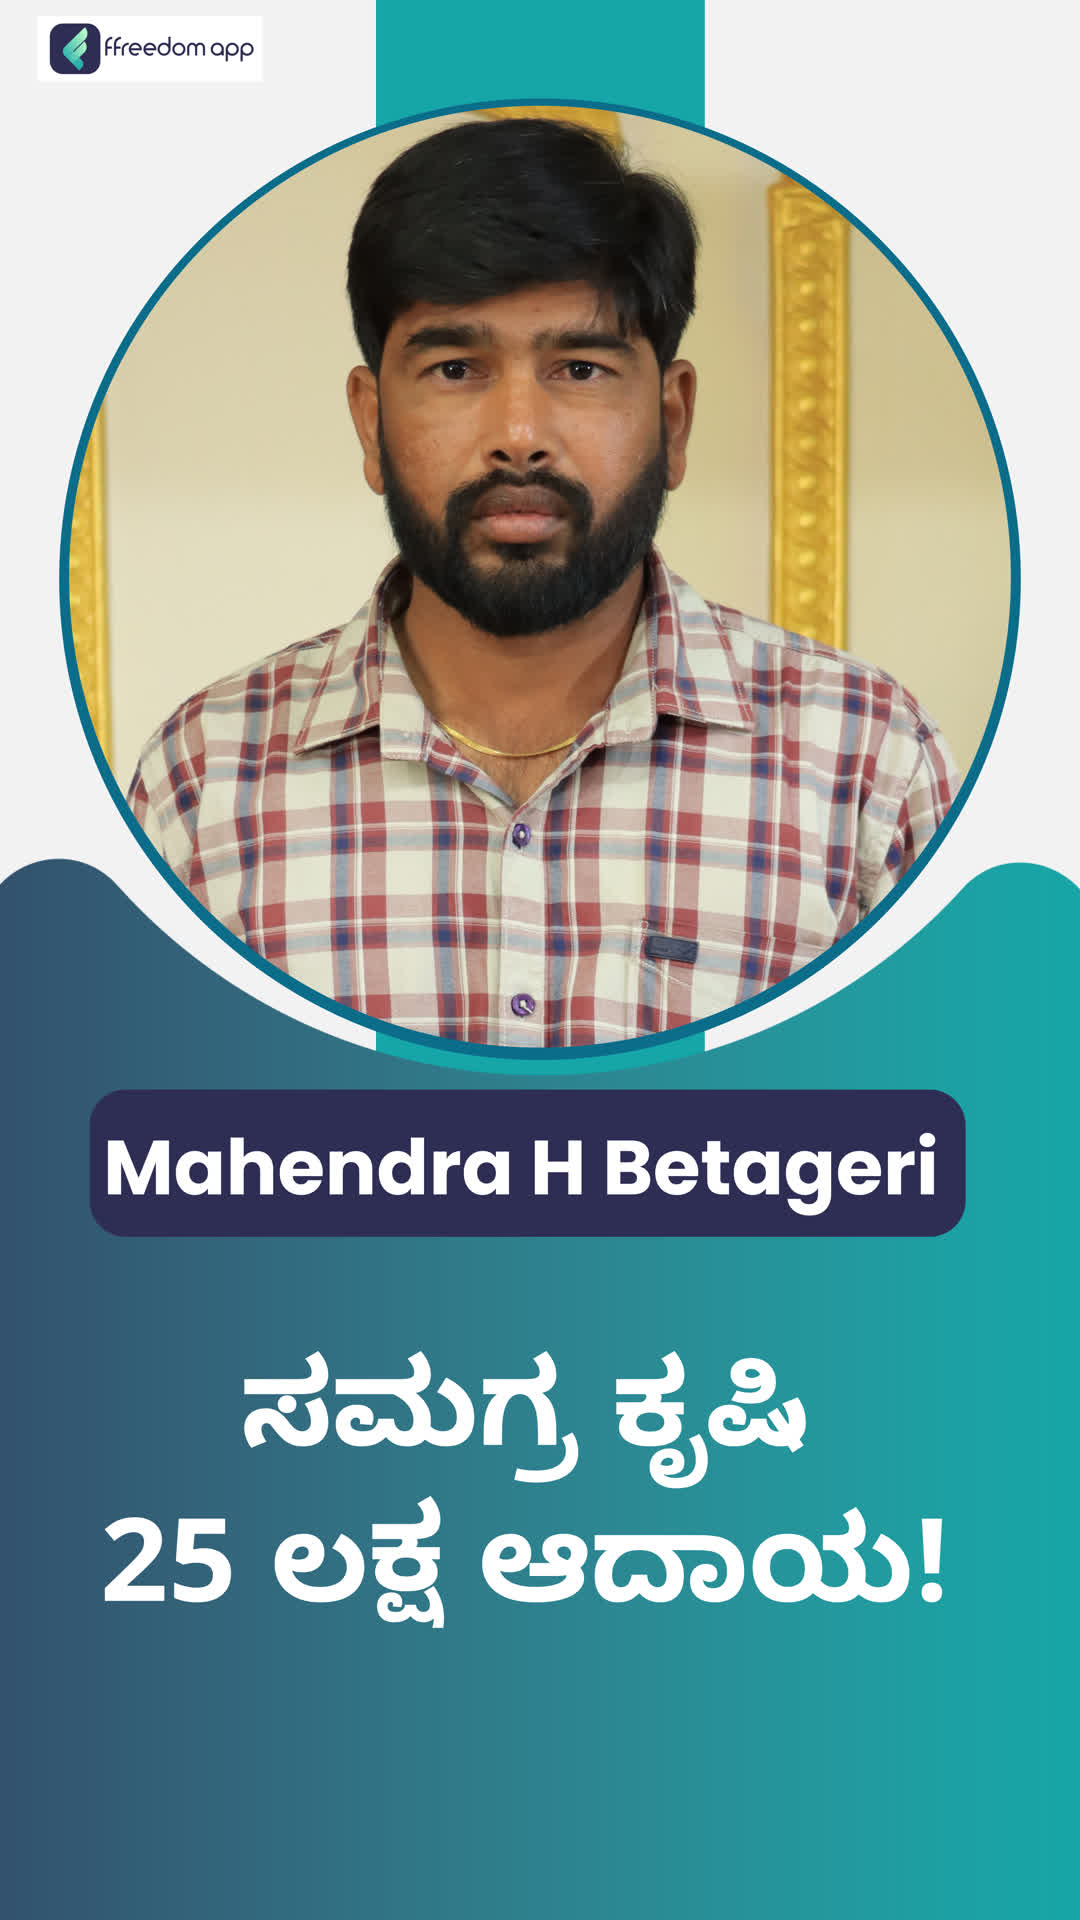 Shreeshil jinnappa's Honest Review of ffreedom app - Bagalkot ,Karnataka